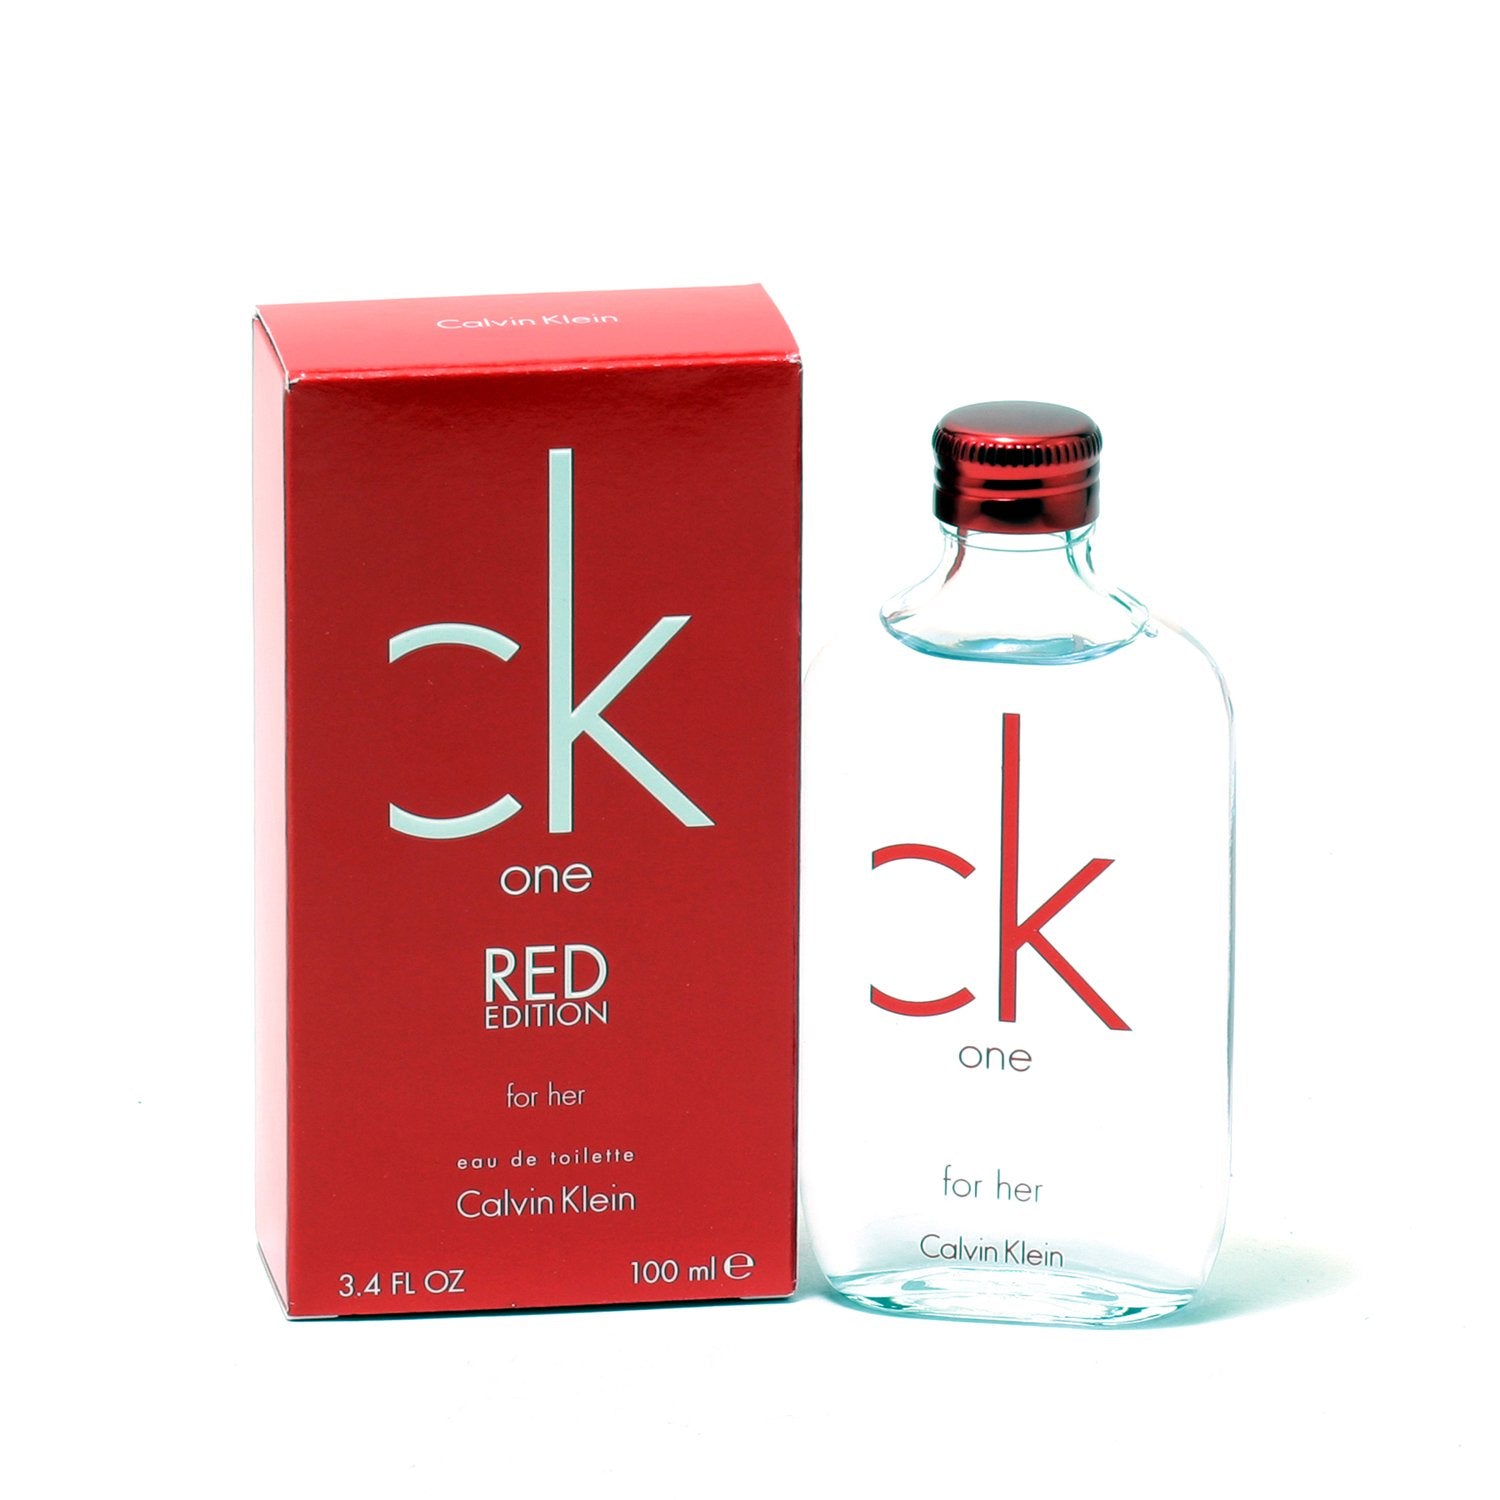 Perfume - CK ONE RED FOR WOMEN BY CALVIN KLEIN - EAU DE TOILETTE SPRAY, 3.4 OZ